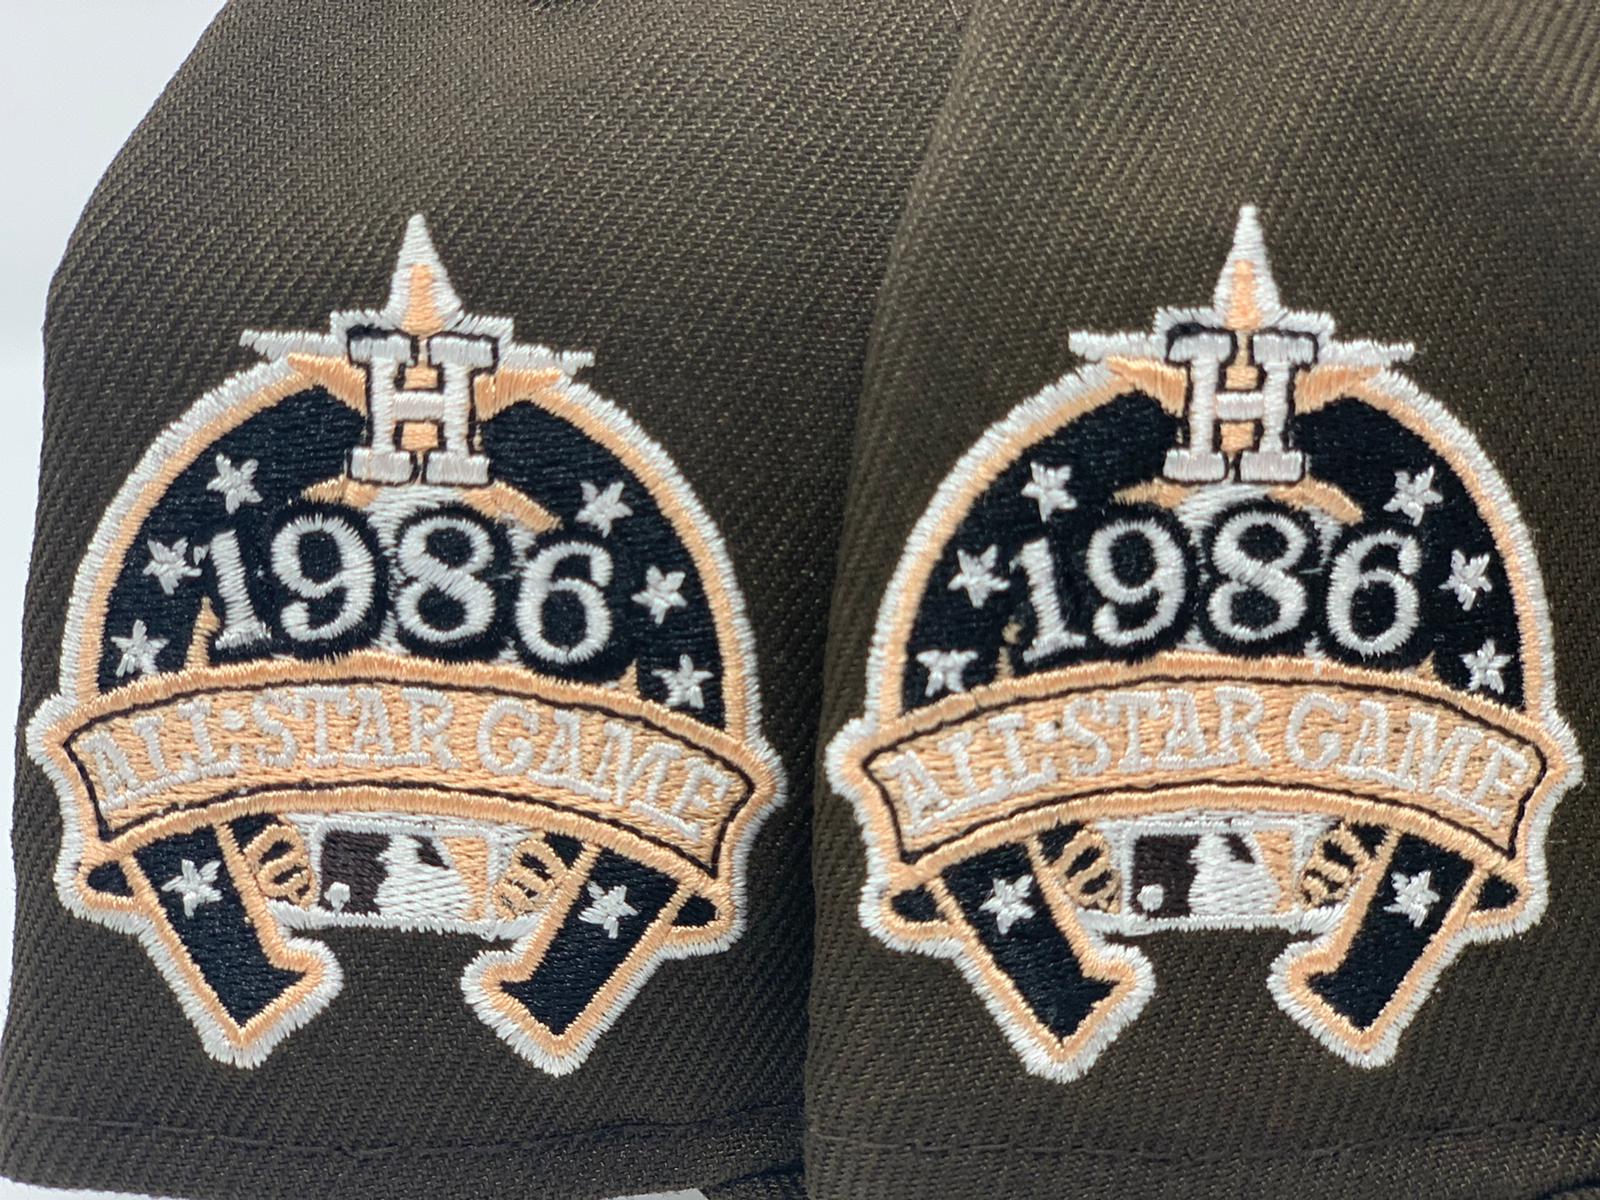 1986 All-Star Game (Houston)